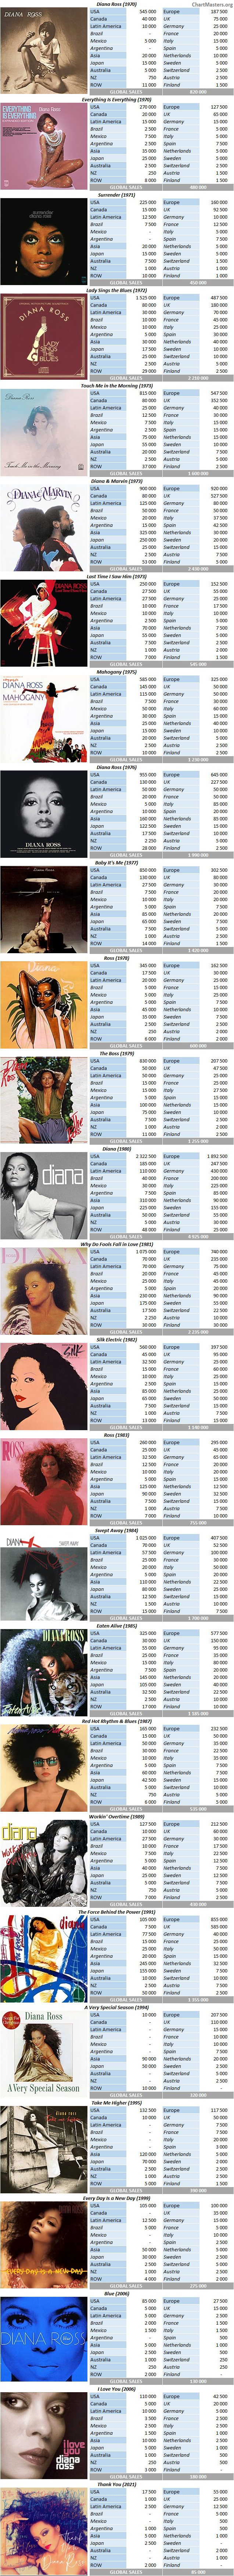 CSPC Diana Ross album sales breakdowns